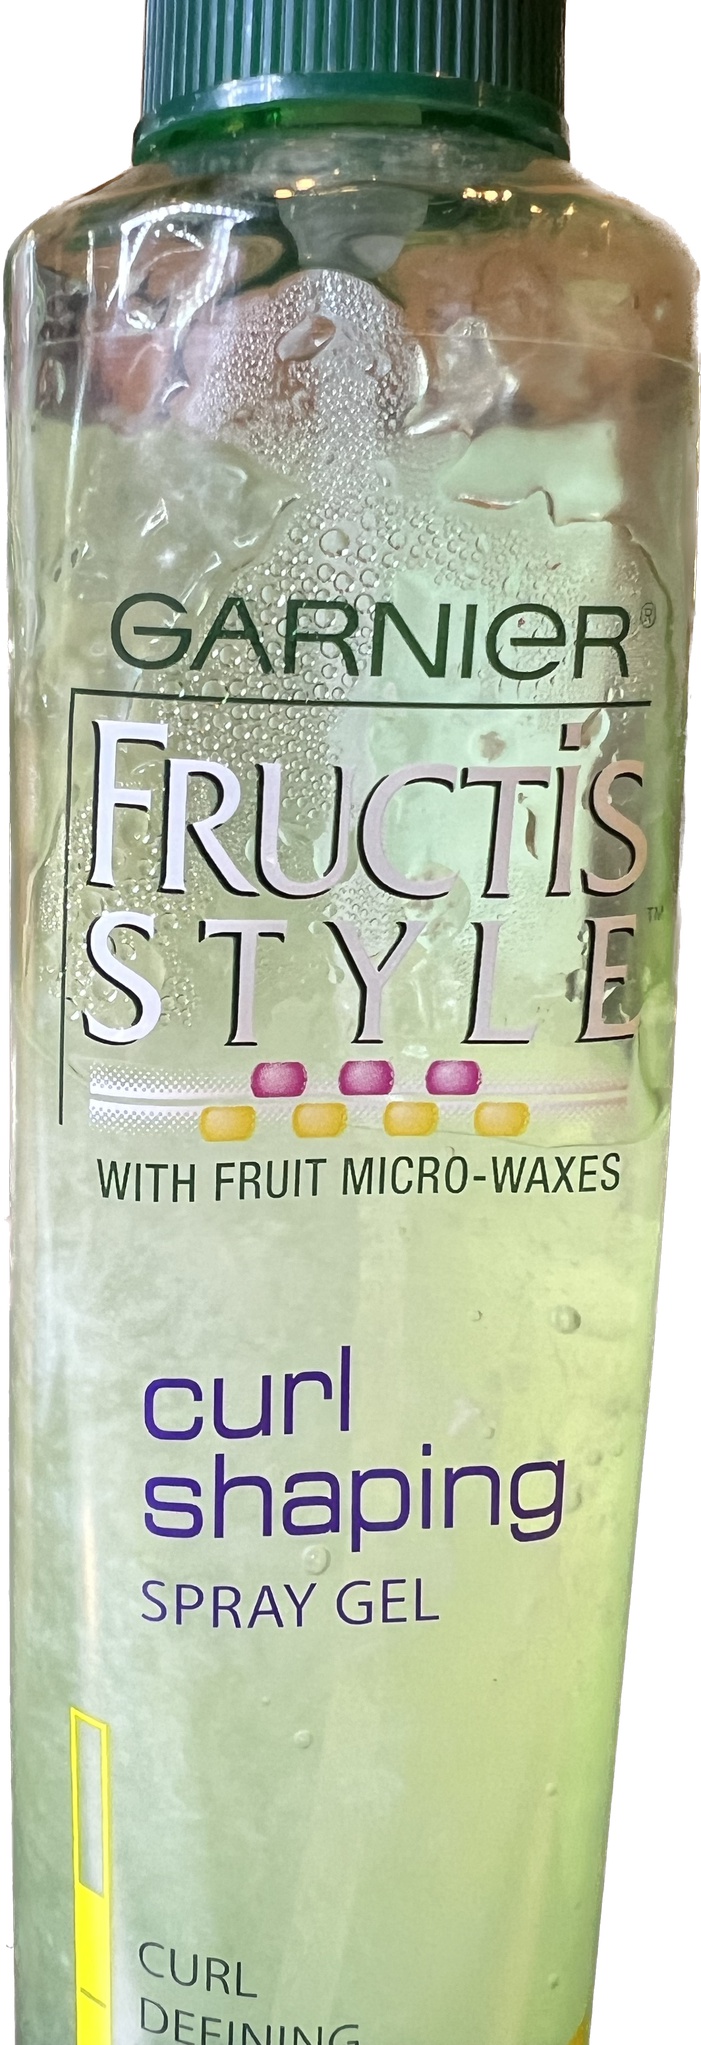 Garnier Fructis Curl Shaping Spray Gel